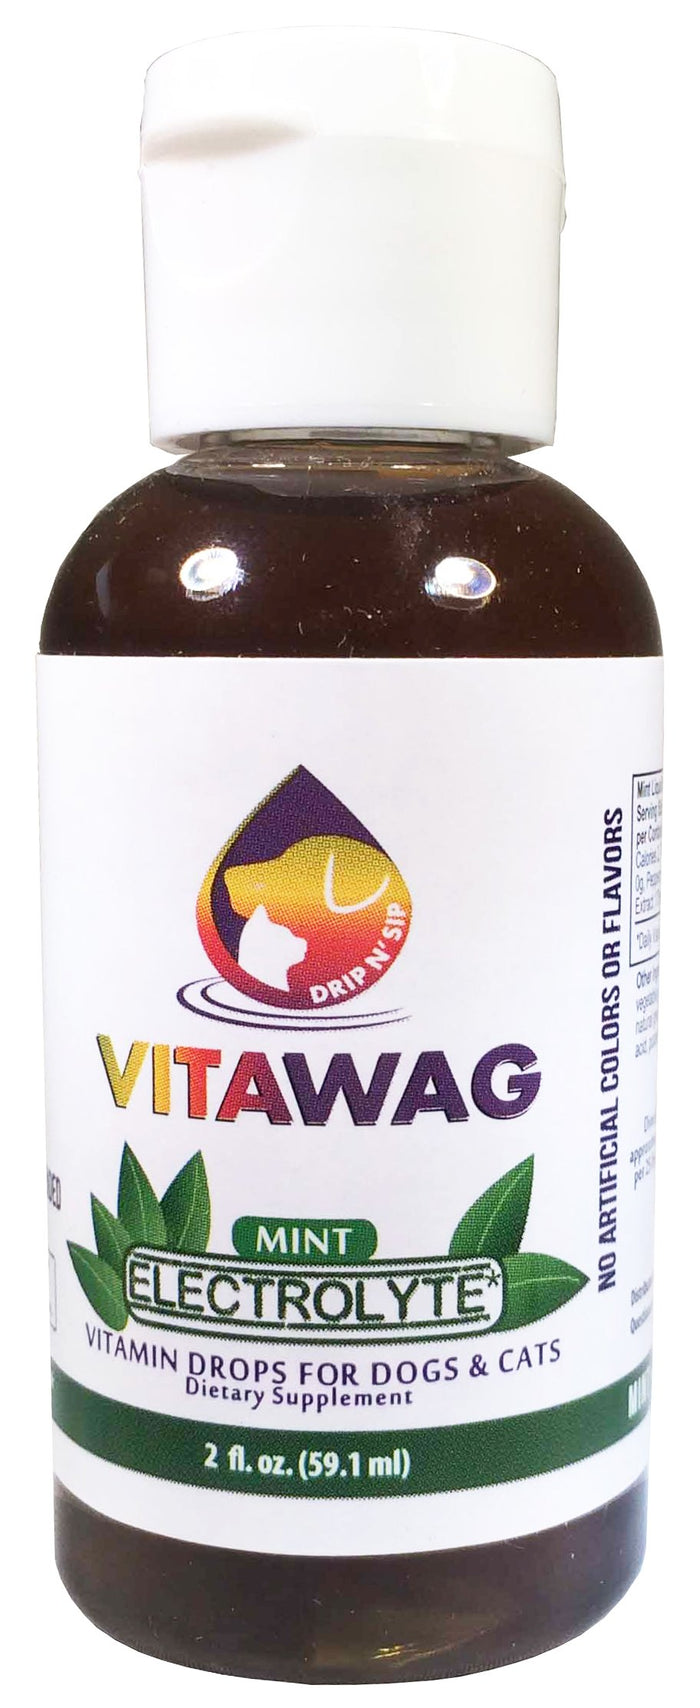 Vitawag All Natural Super Concentrated Dog and Cat Liquid Supplements